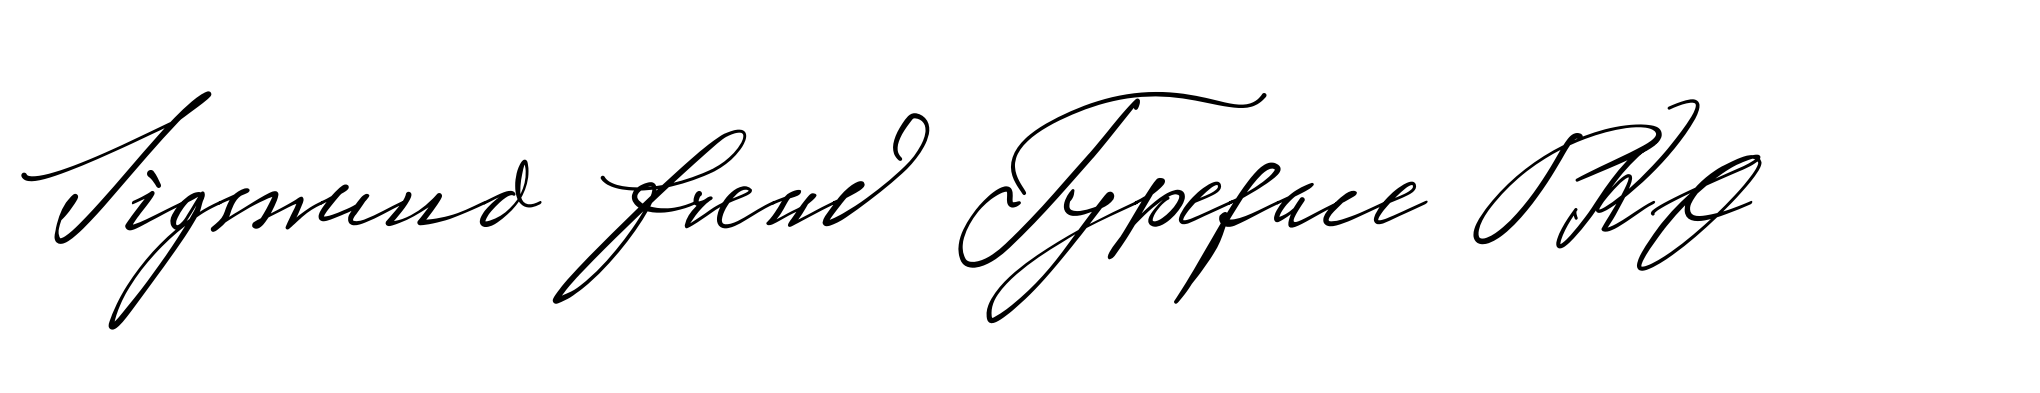 Sigmund Freud Typeface PRO image